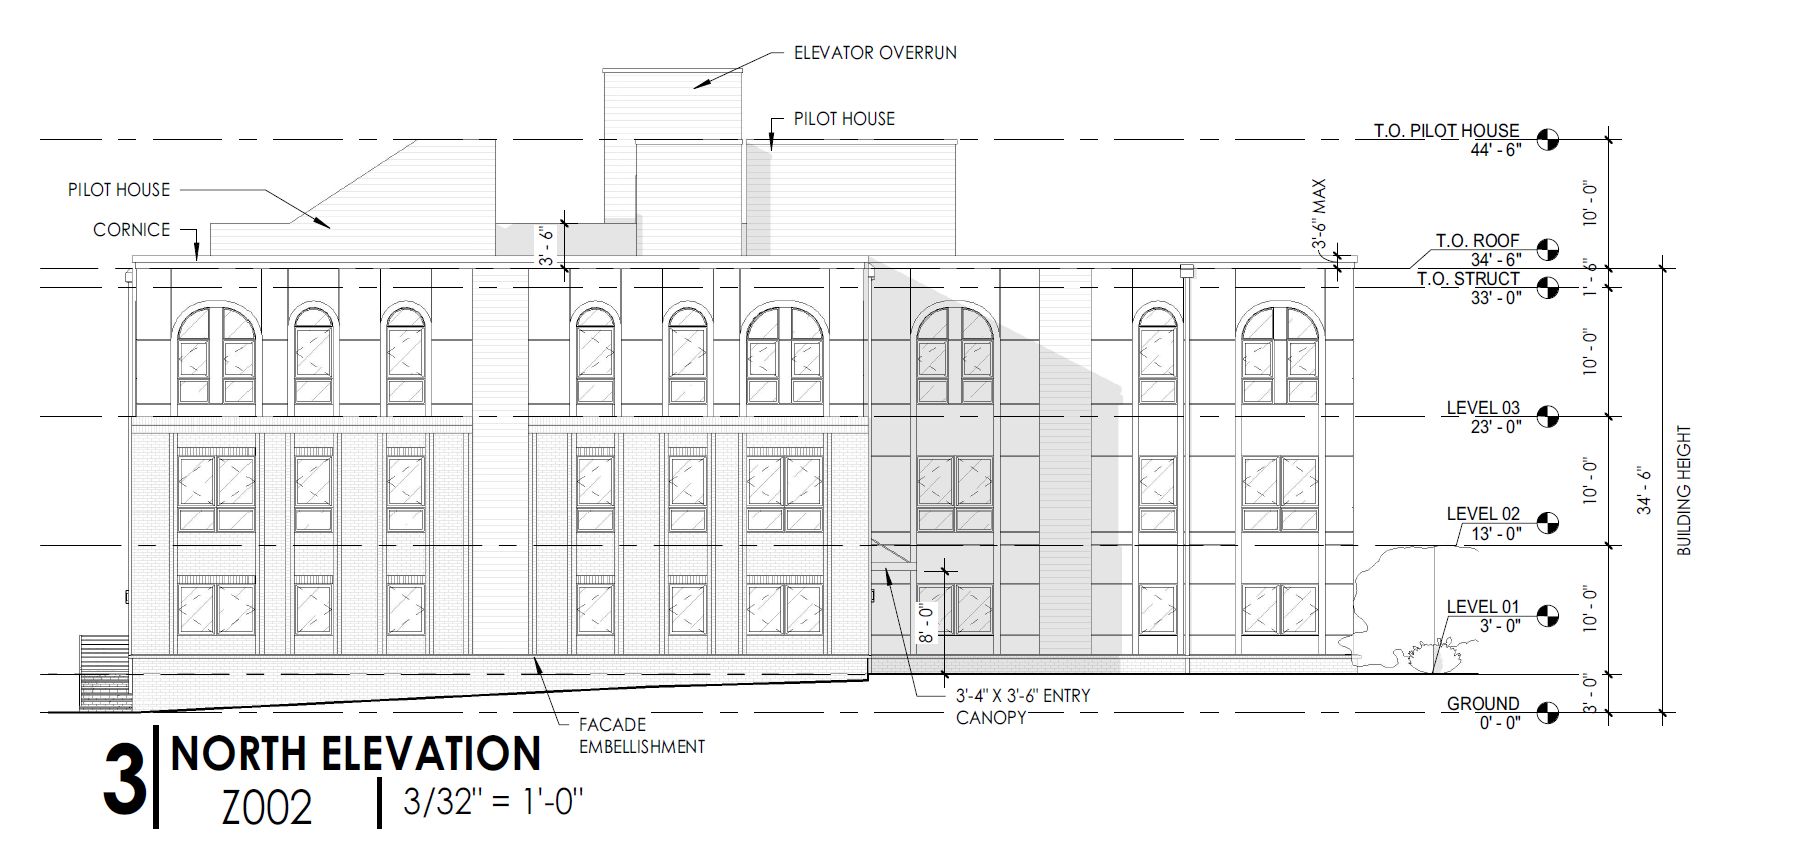 3120 North Park Avenue. Building elevation. Credit: Designblendz via the City of Philadelphia